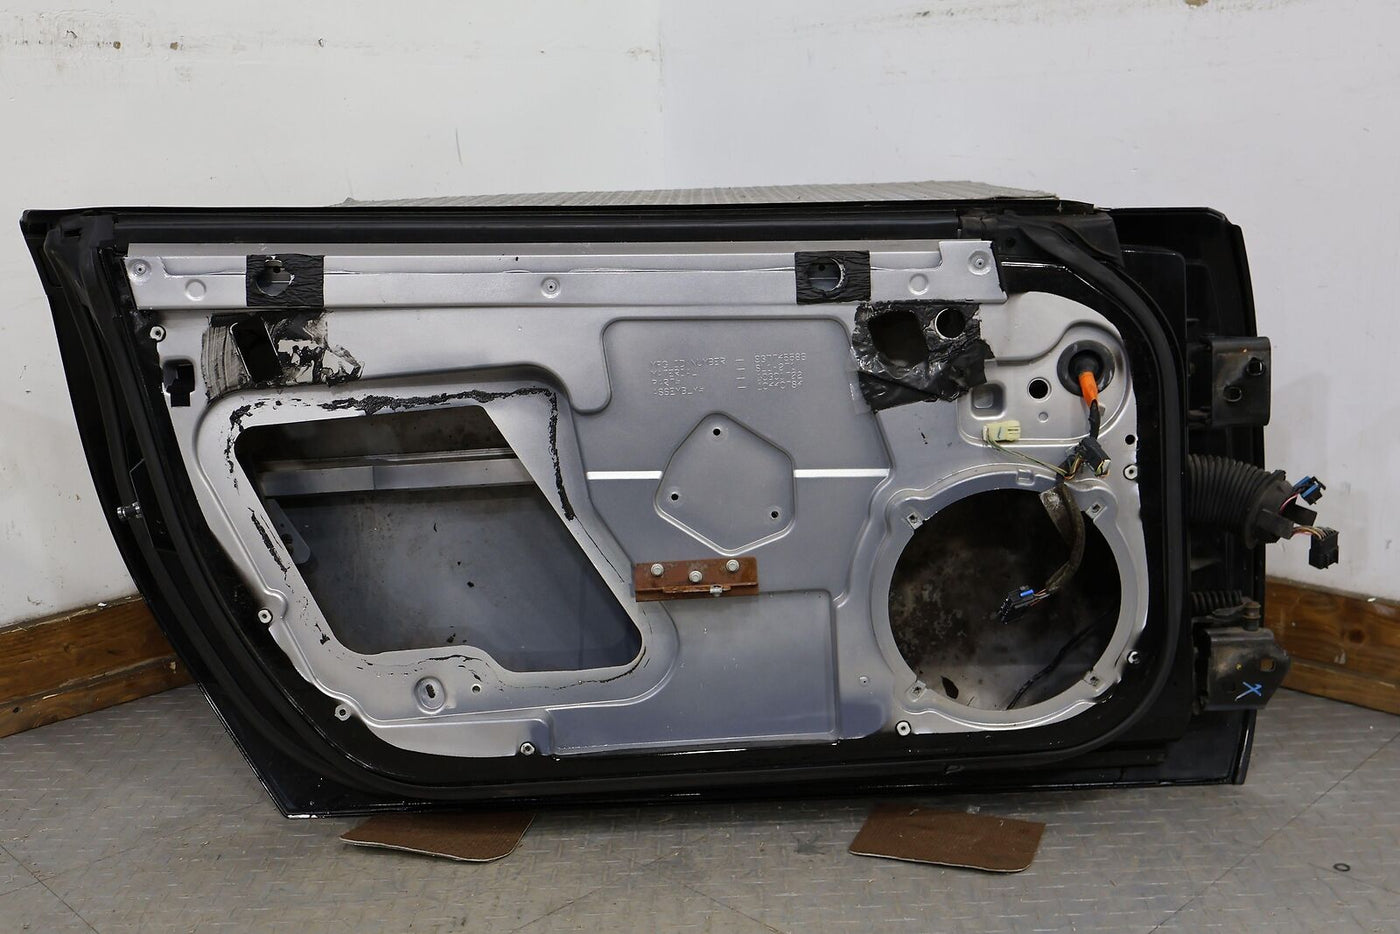 04-09 Cadillac XLR Left LH Driver Door Shell (Black Respray) Sold Bare